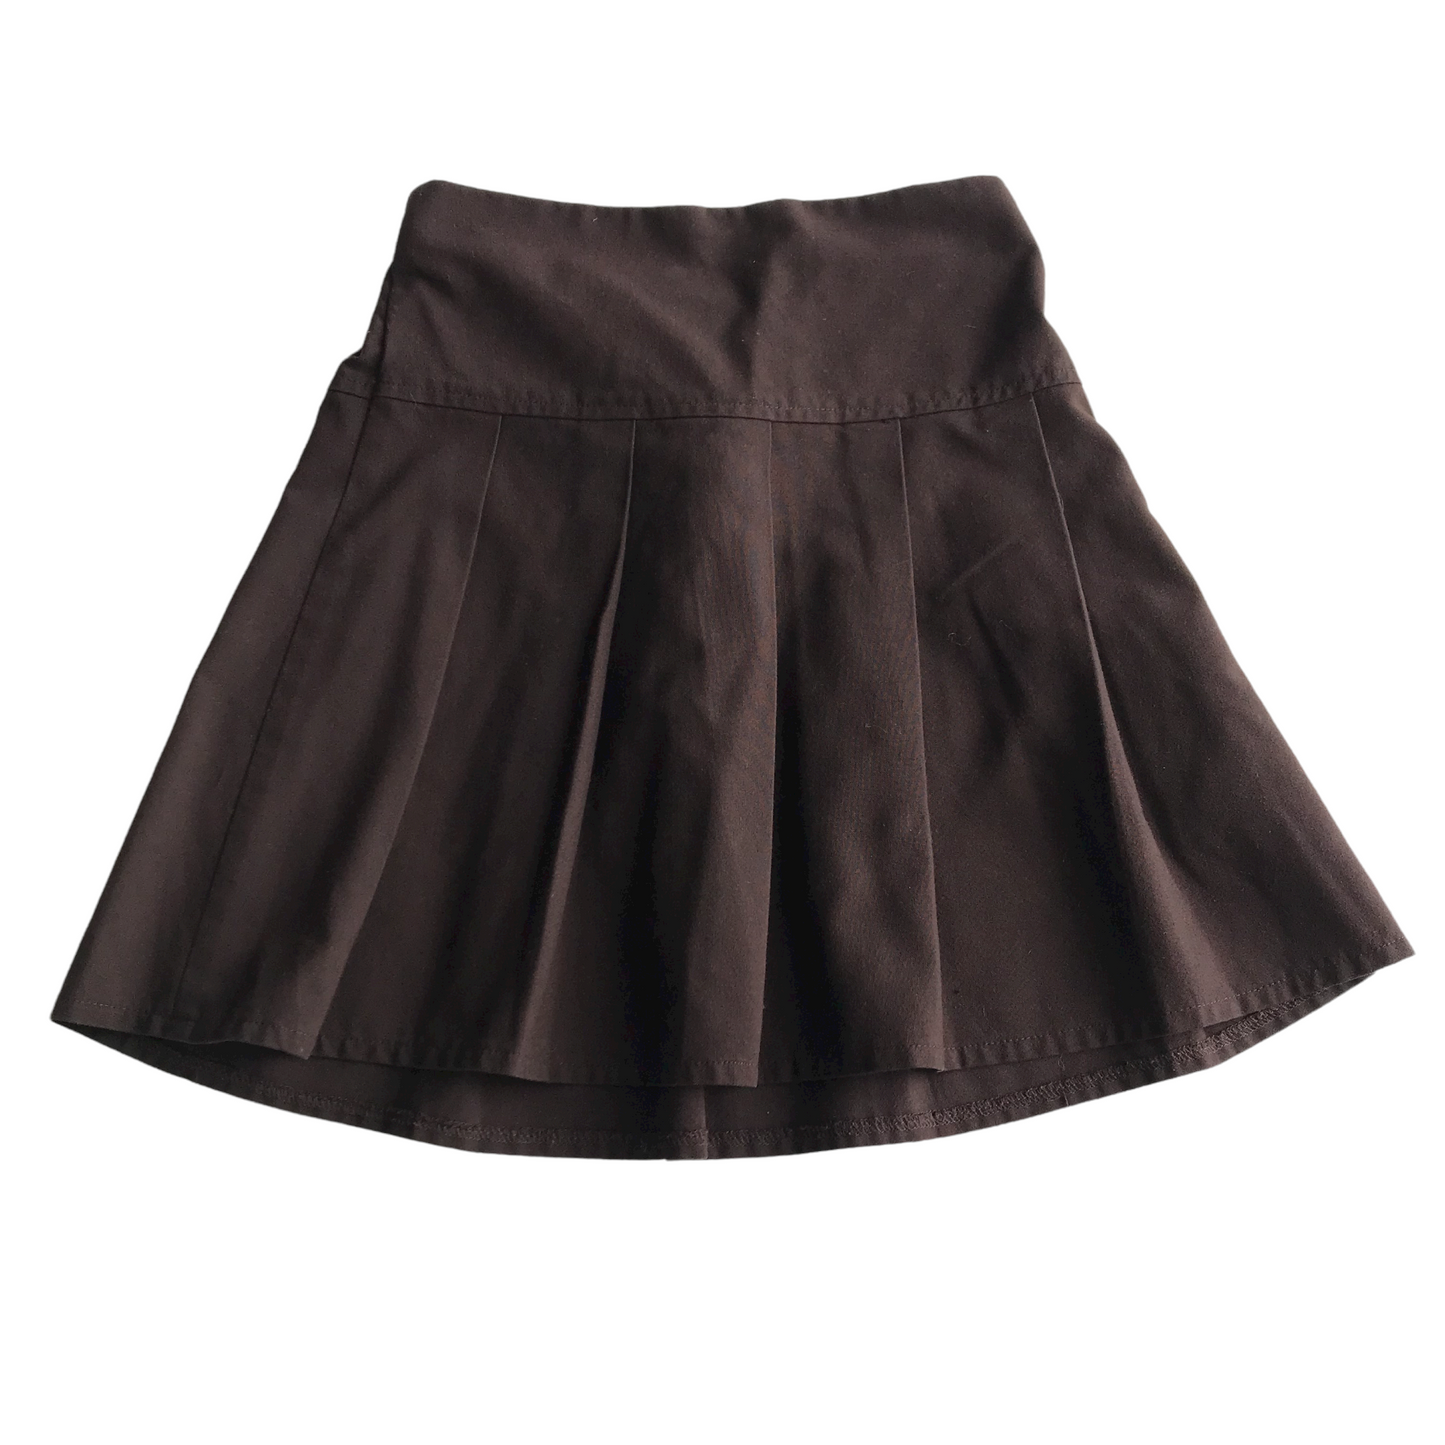 Brown School Skirt with Pleats